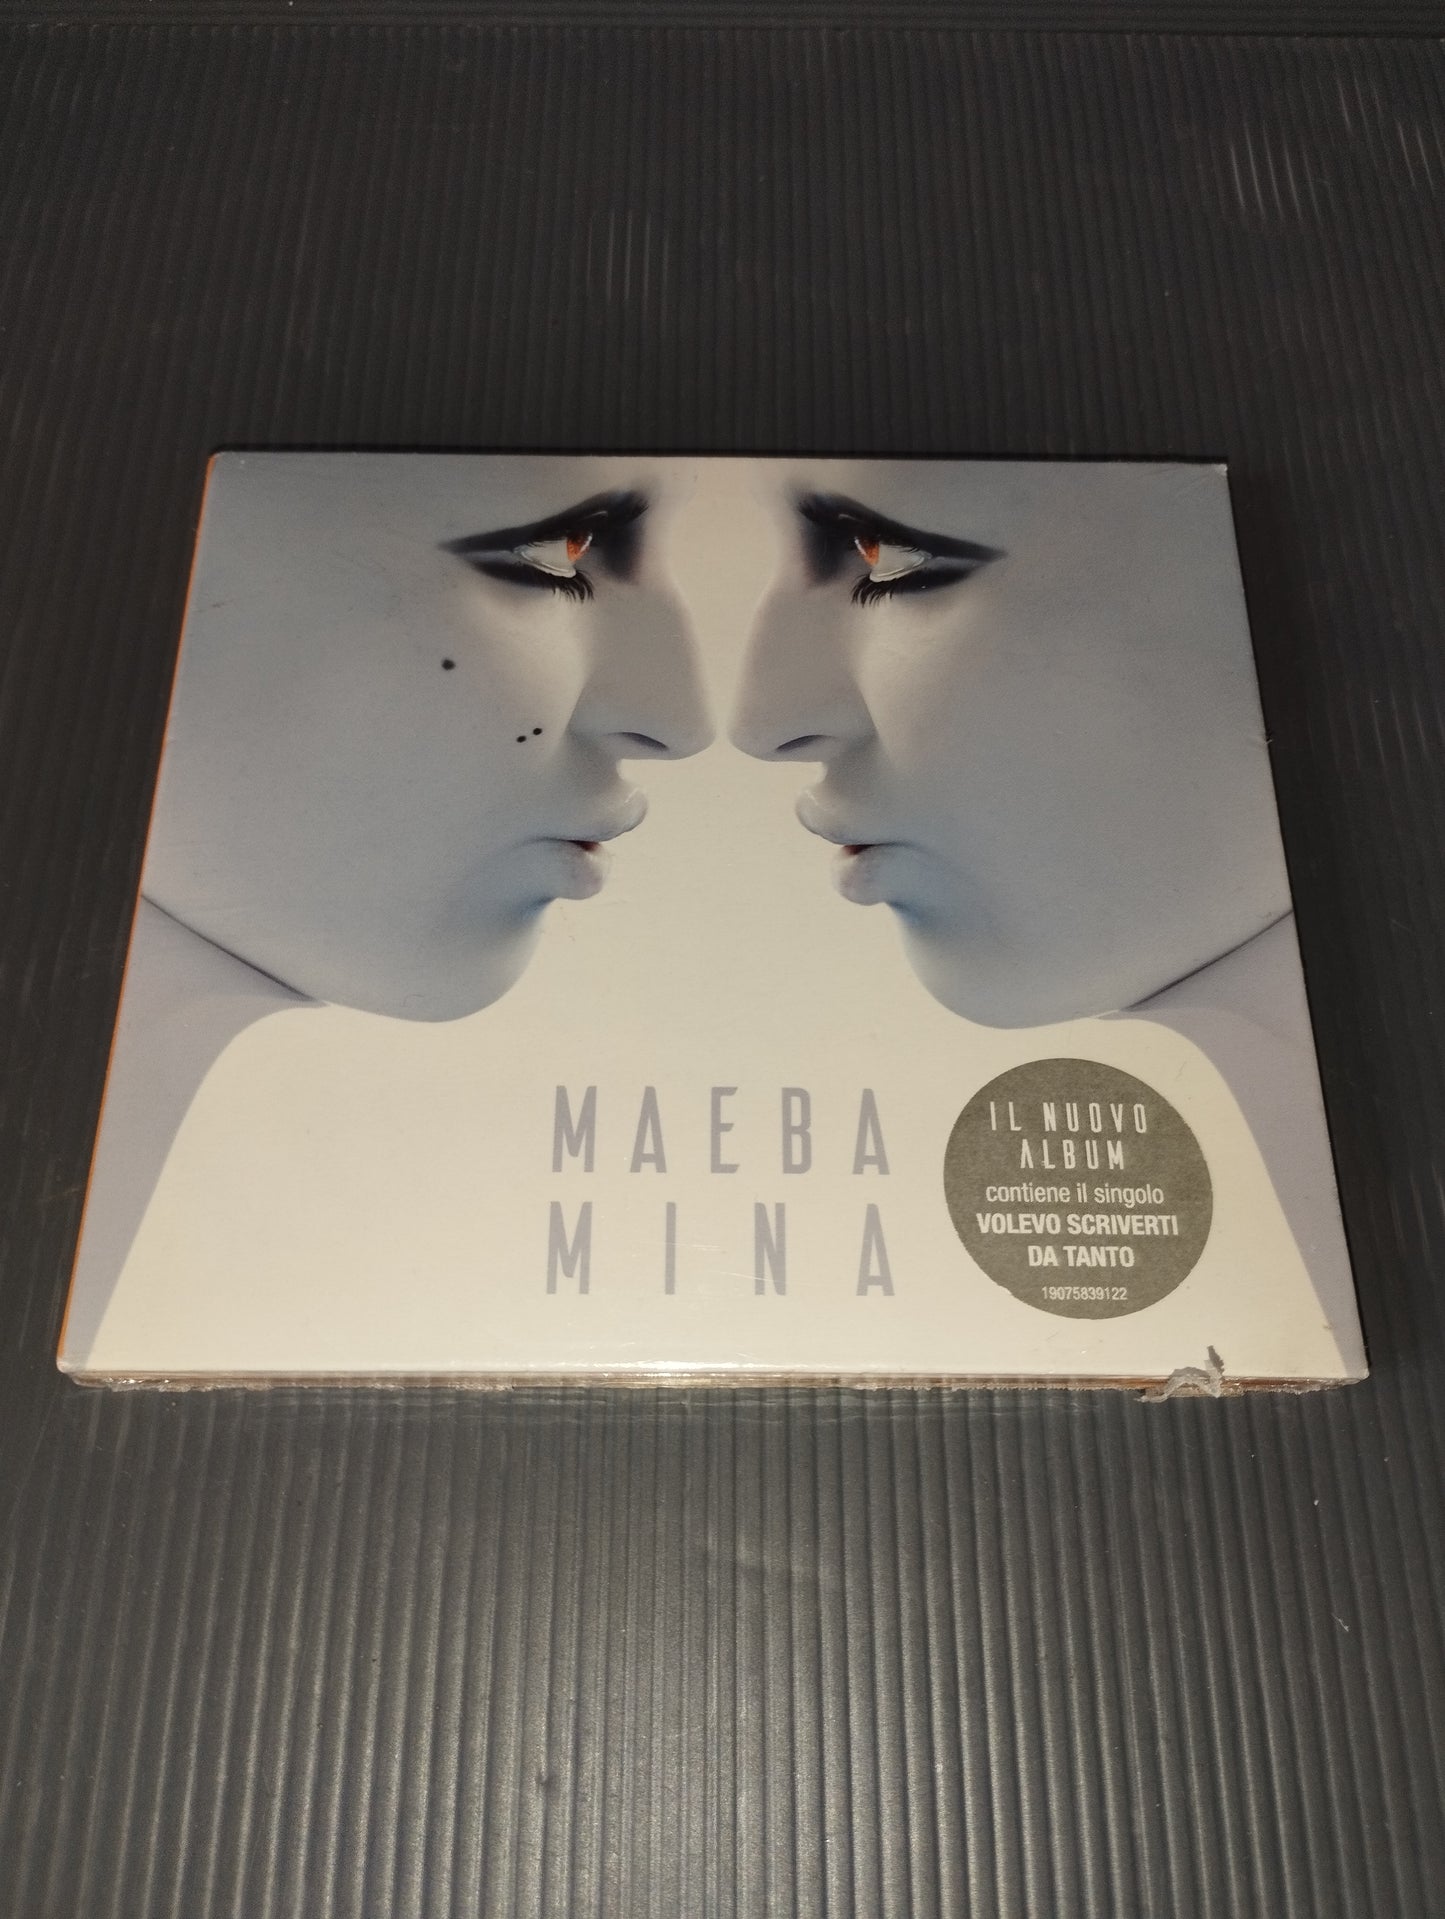 Maeba" Mina
CD Sony Music
Sigillato